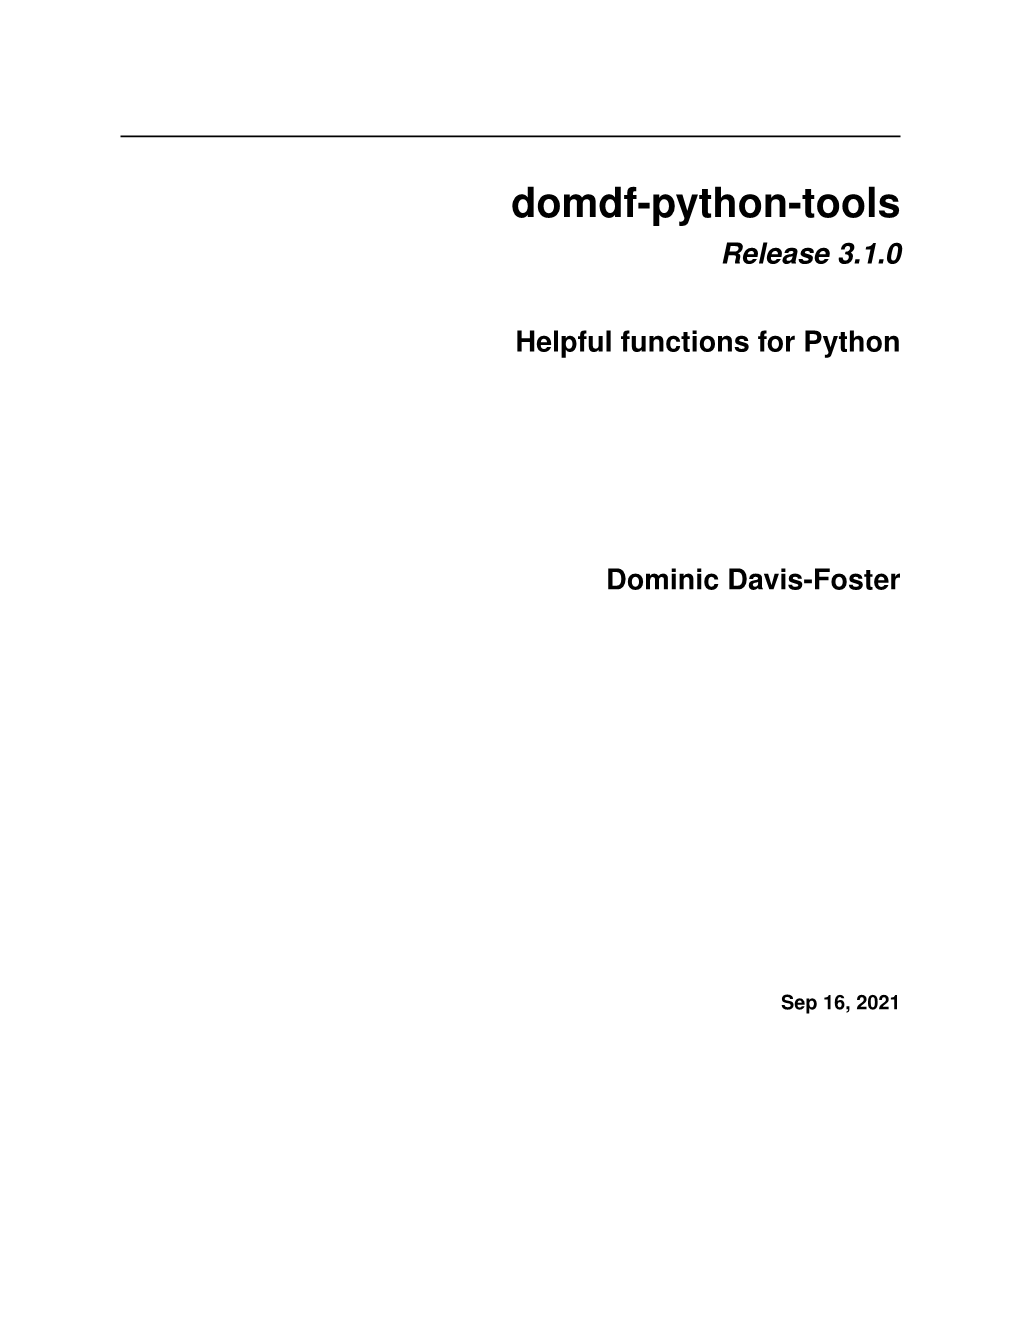 Domdf-Python-Tools Release 3.1.0